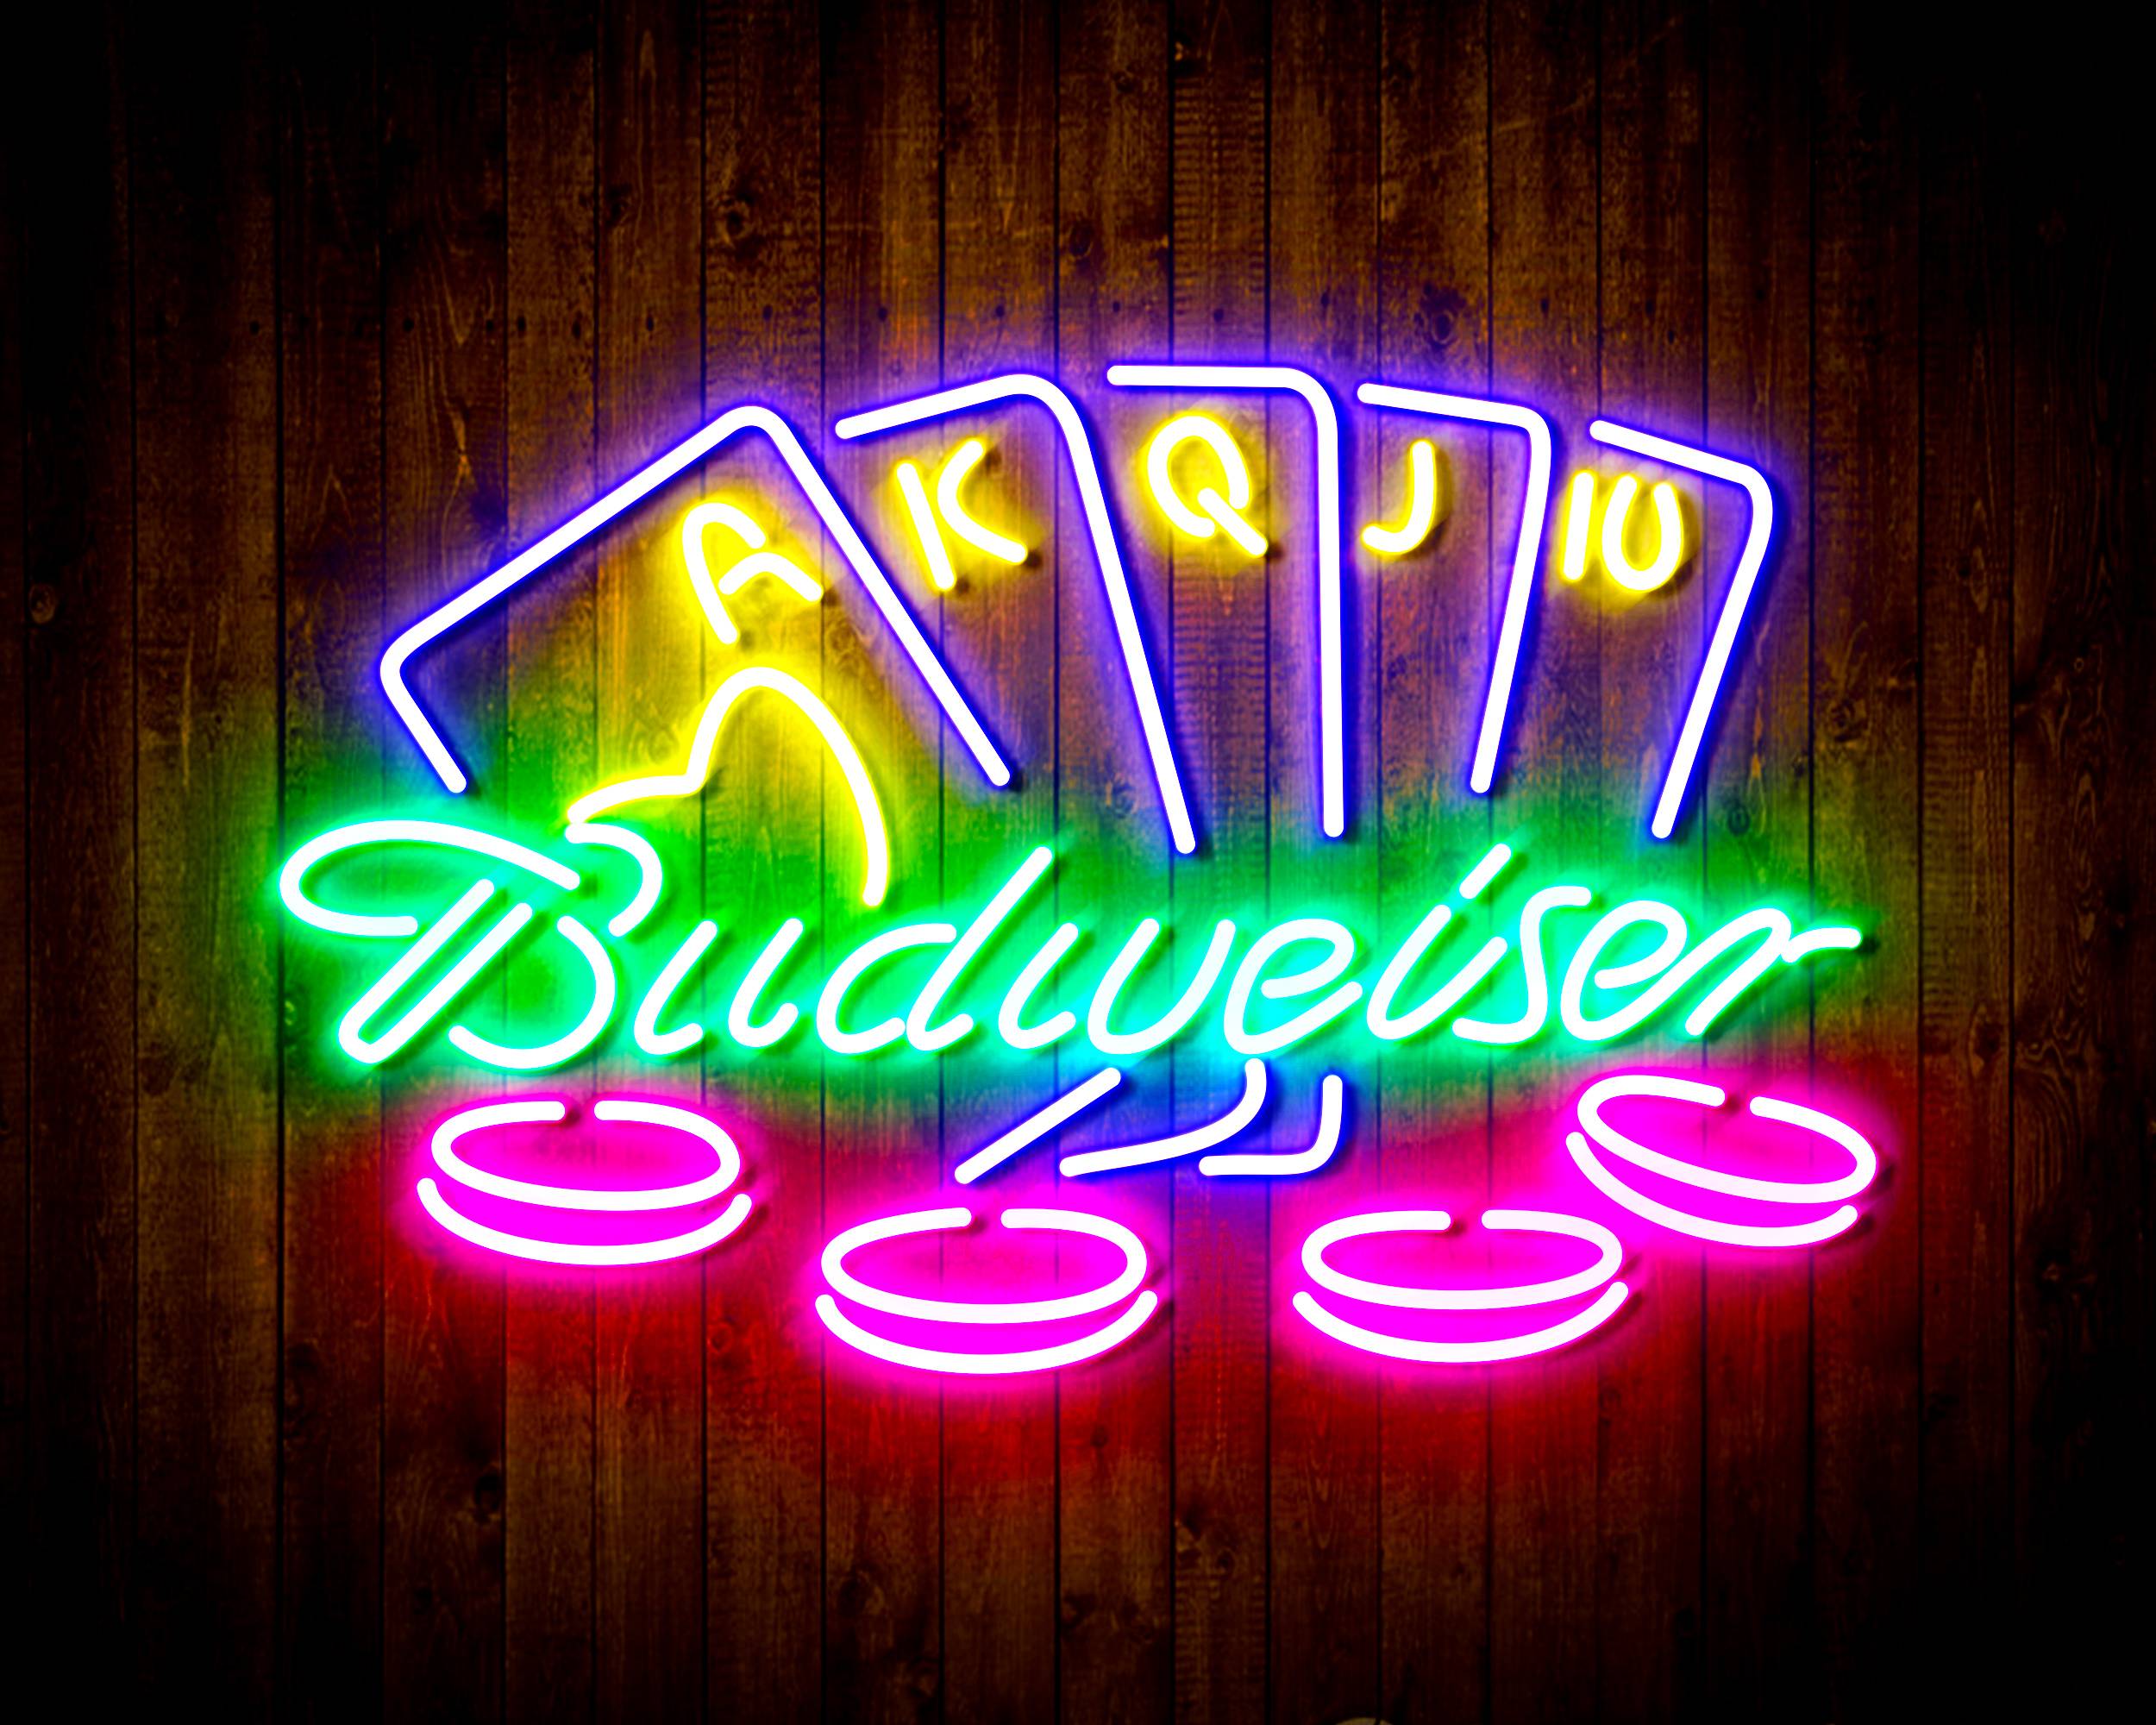 Budweiser Casino Cards Game Handmade LED Neon Light Sign